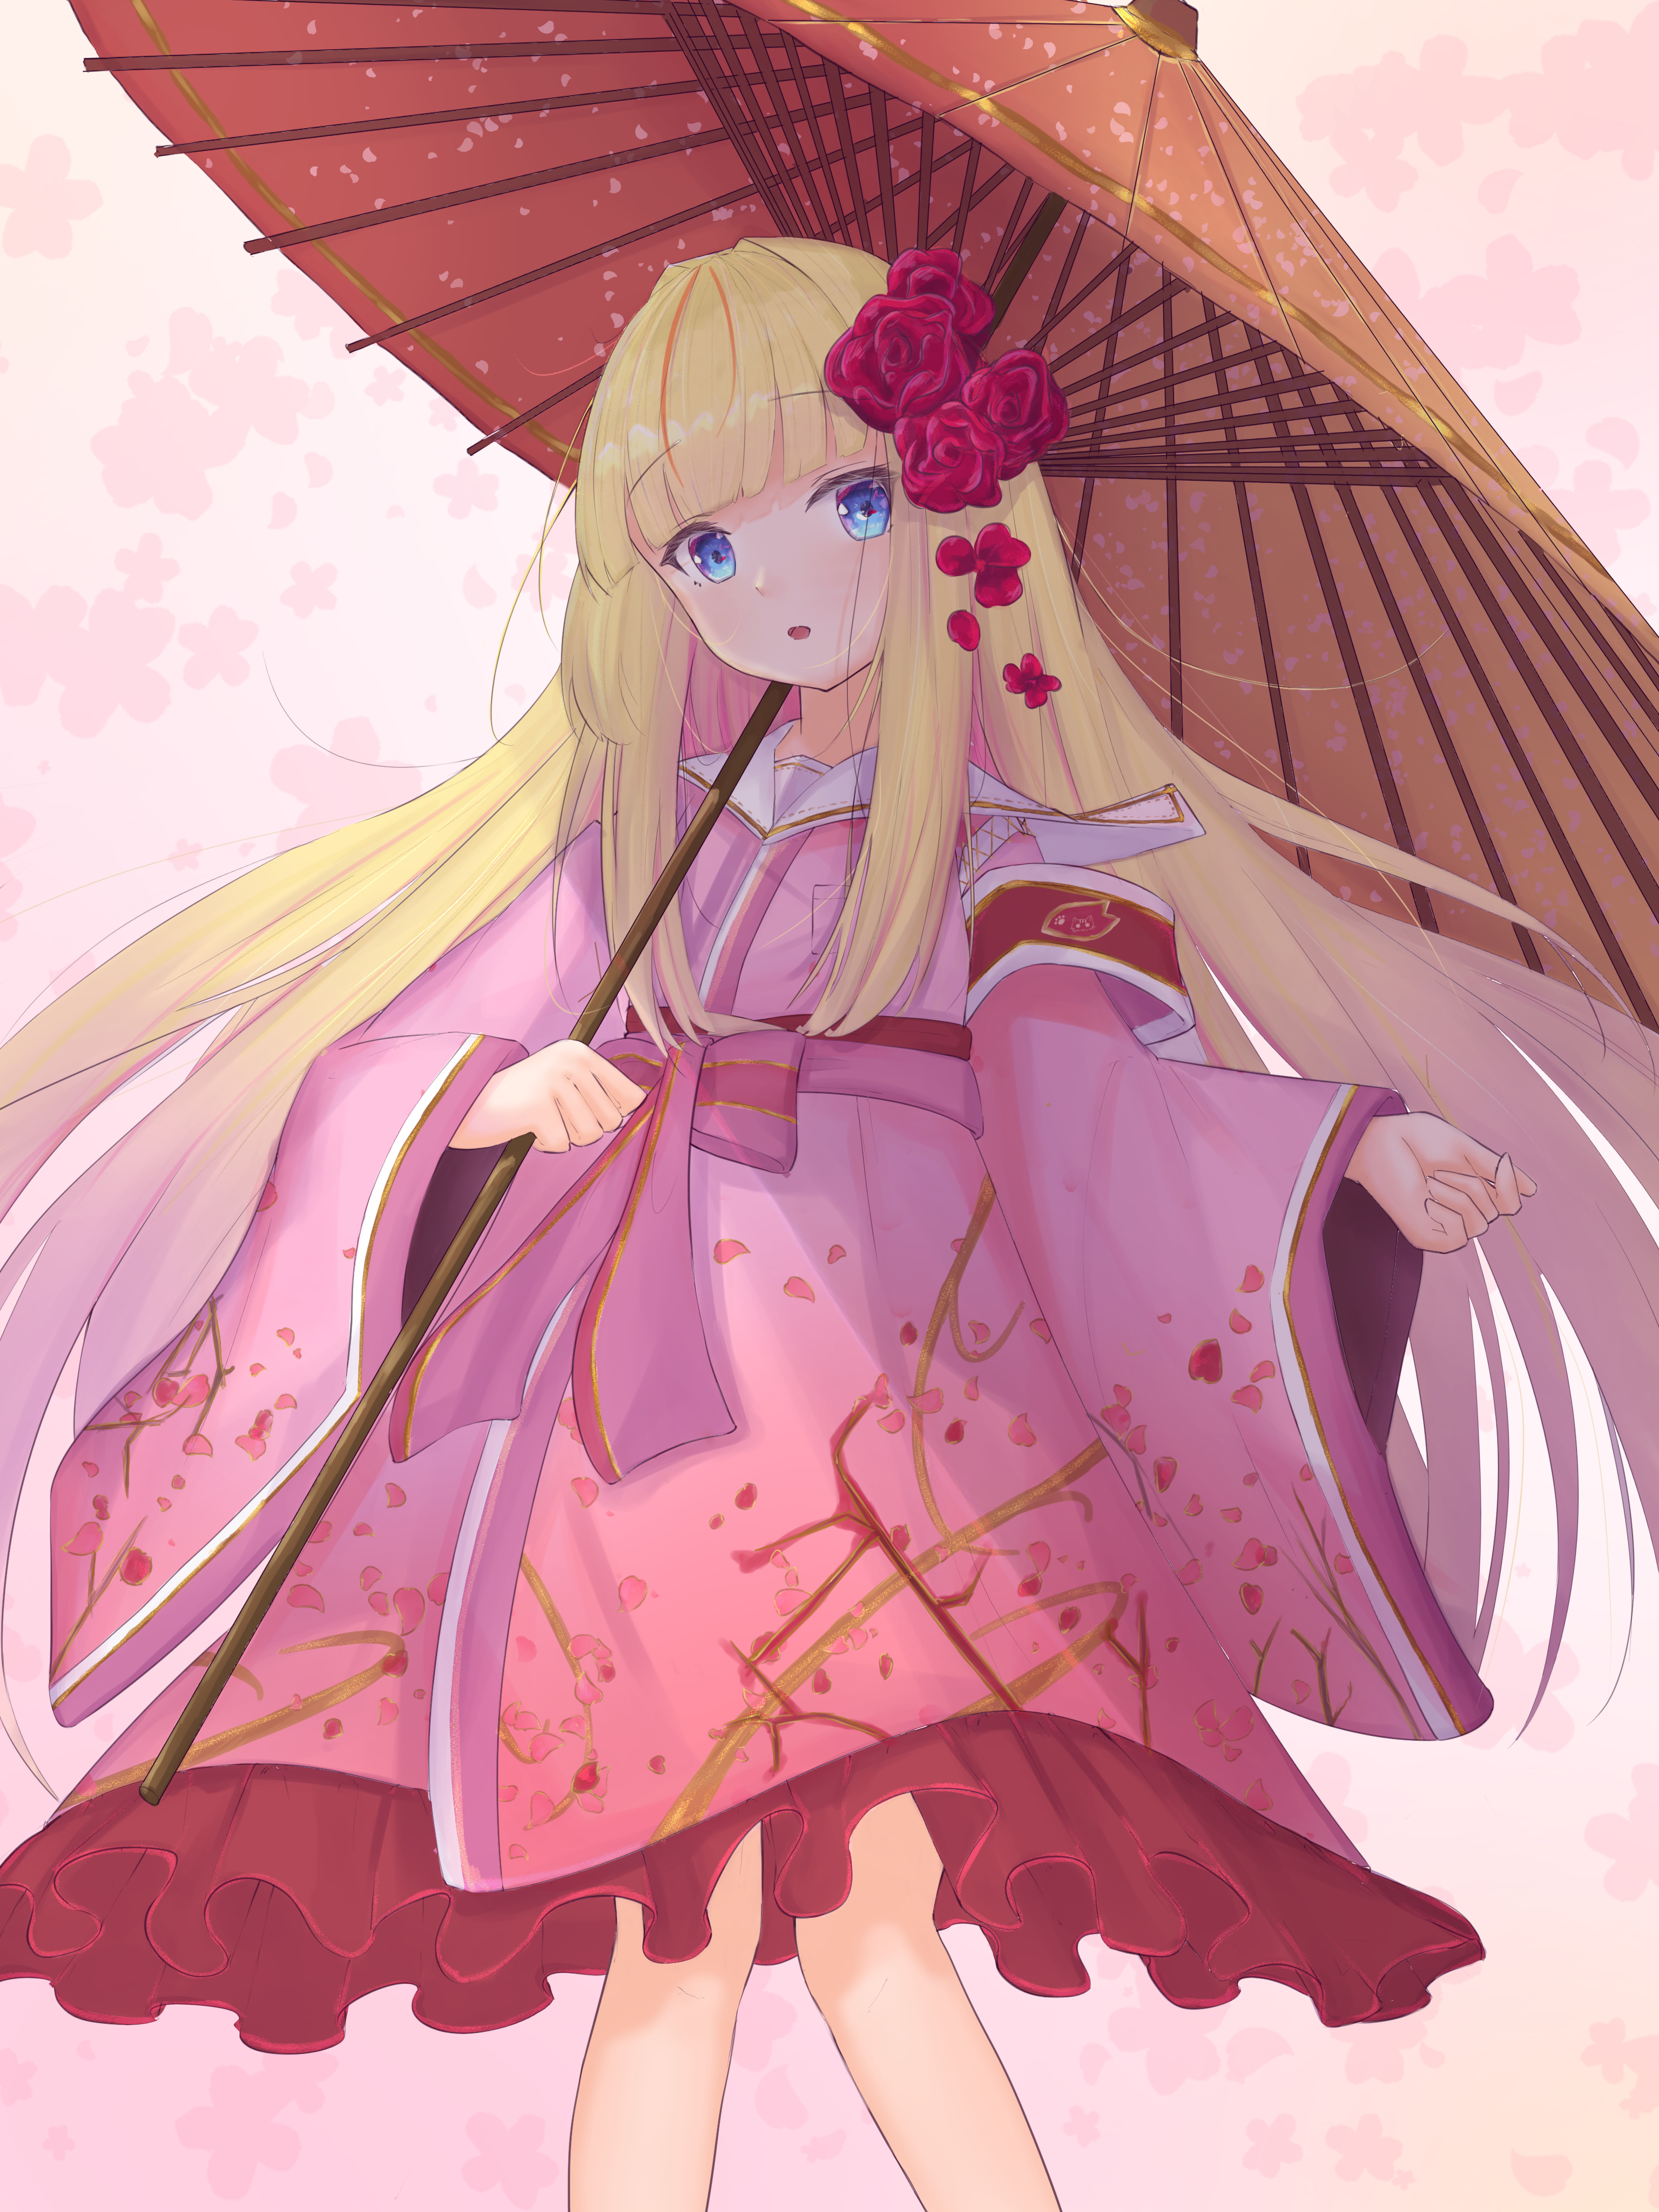 Girl Kimono Umbrella Anime Art Pink